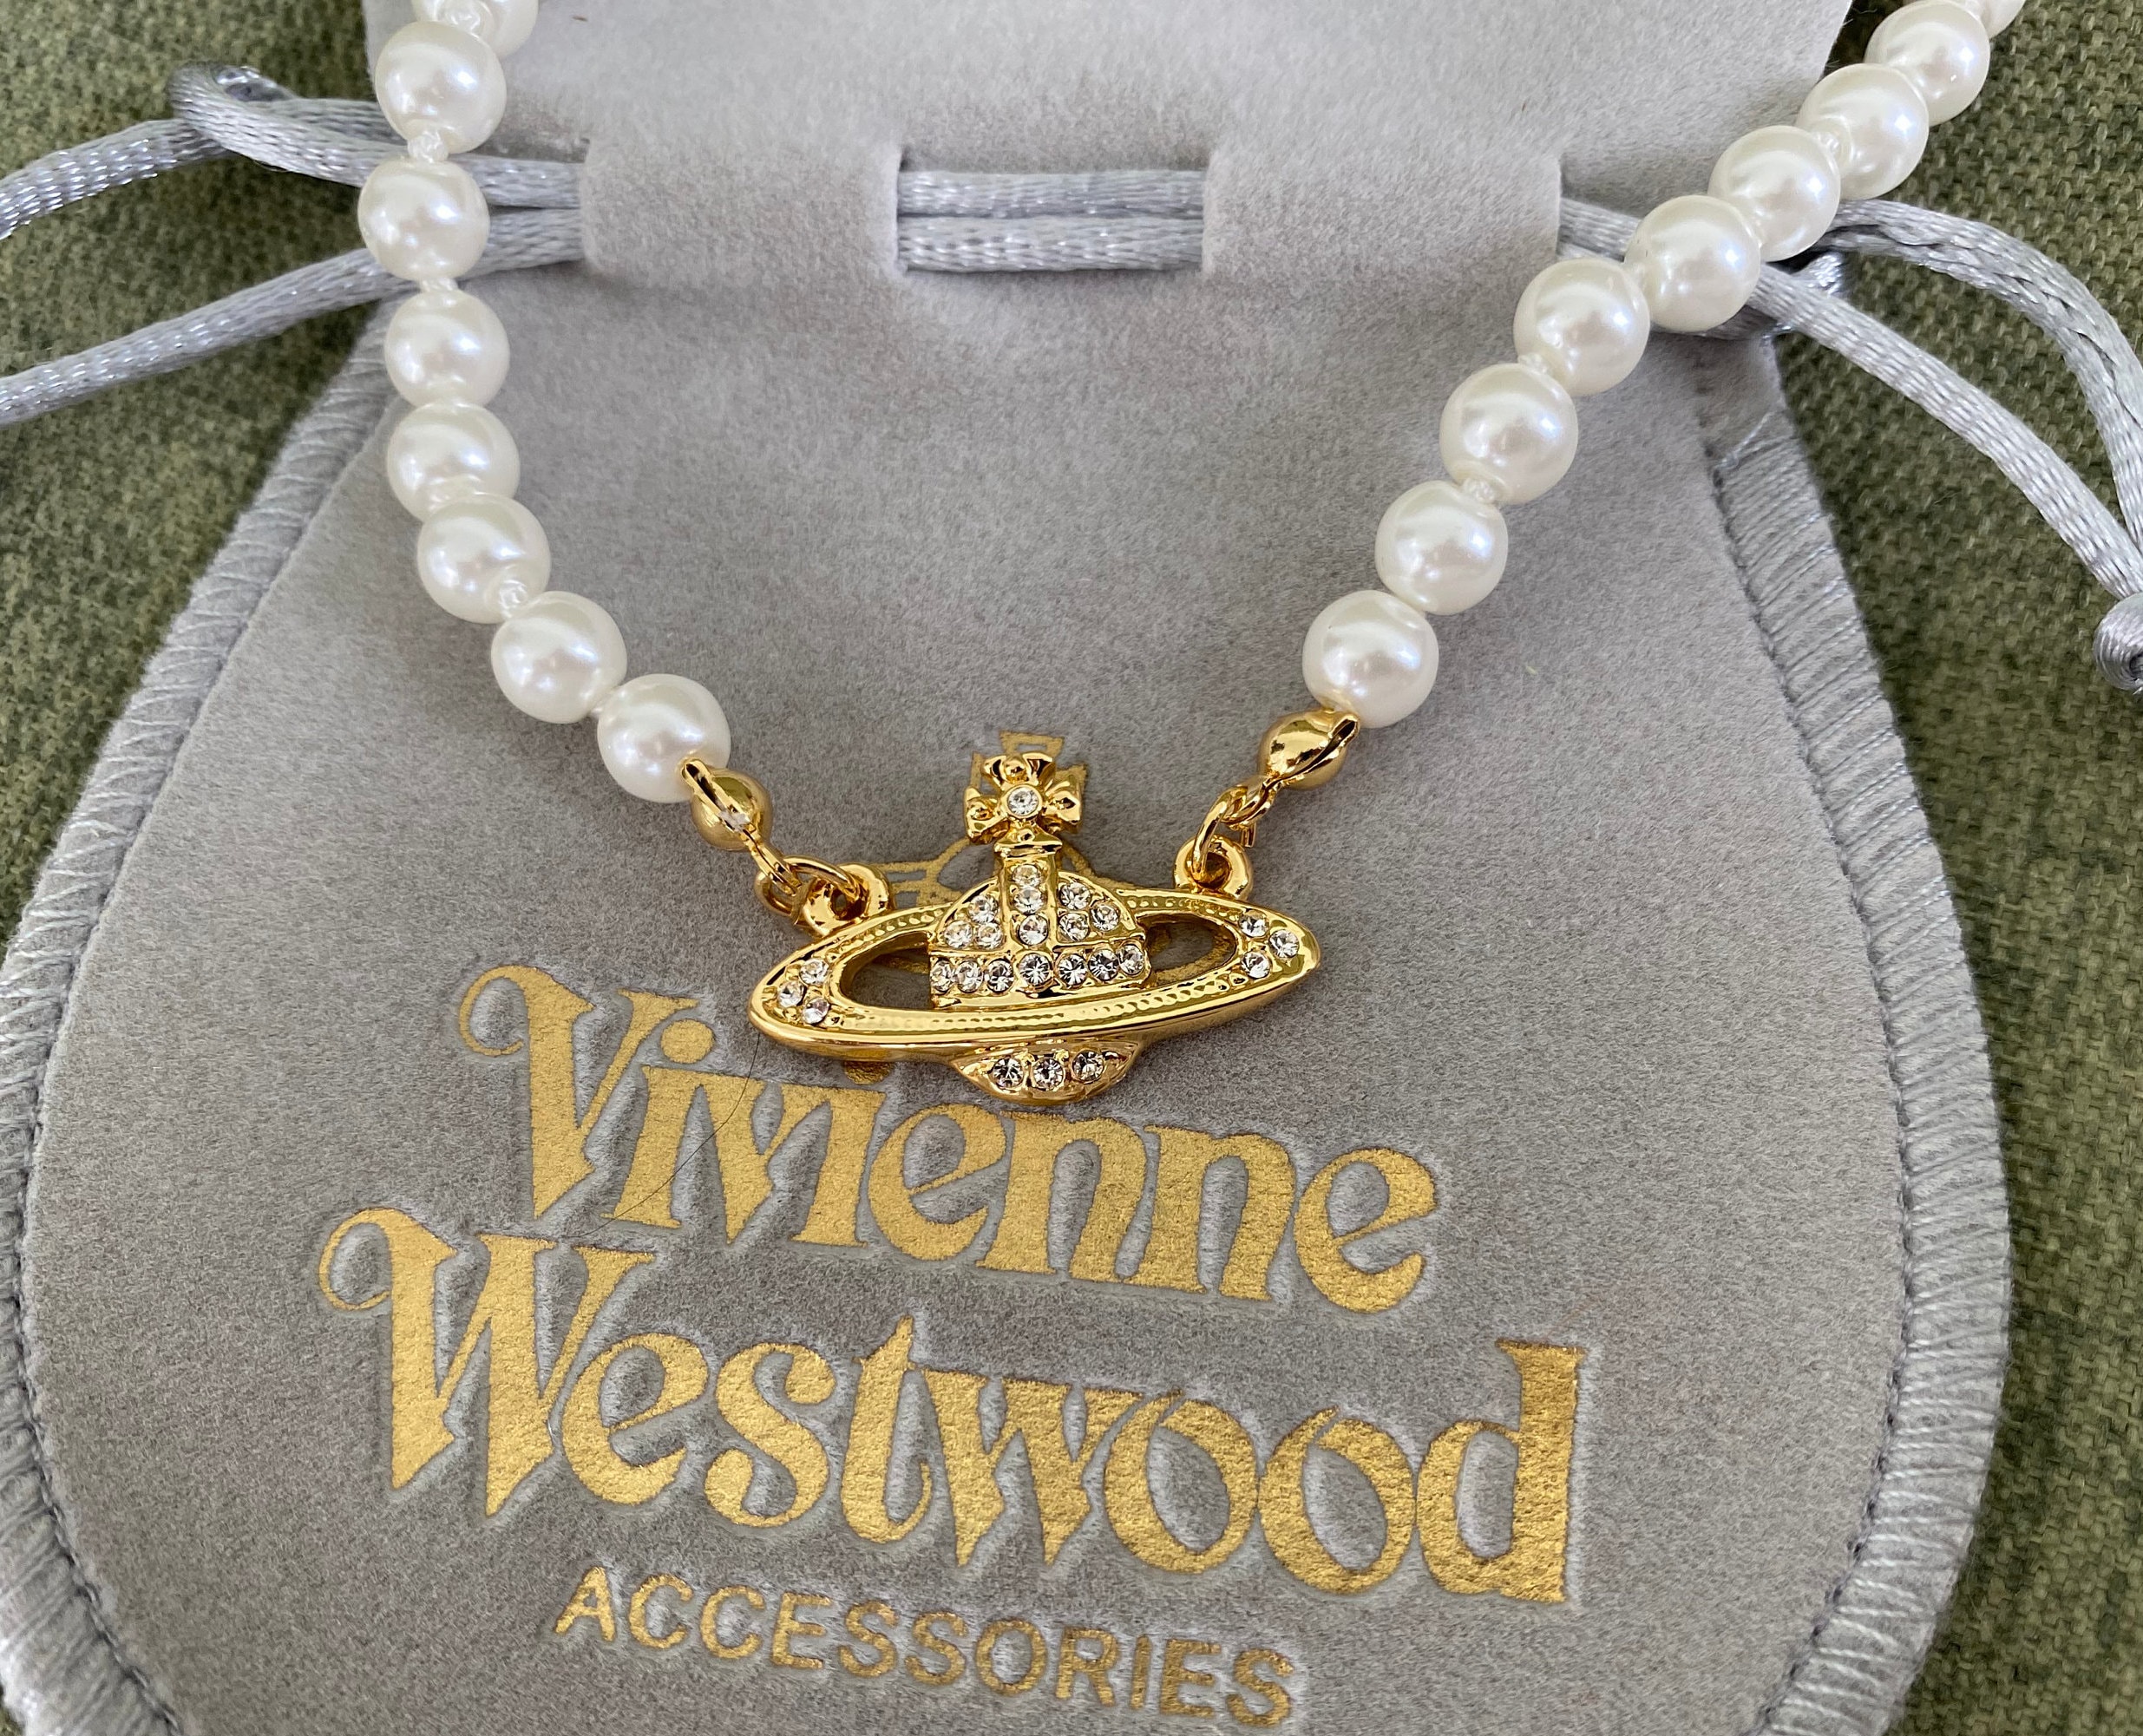 新商品!新型 Vivienne Westwood ACCESSORIES kids-nurie.com